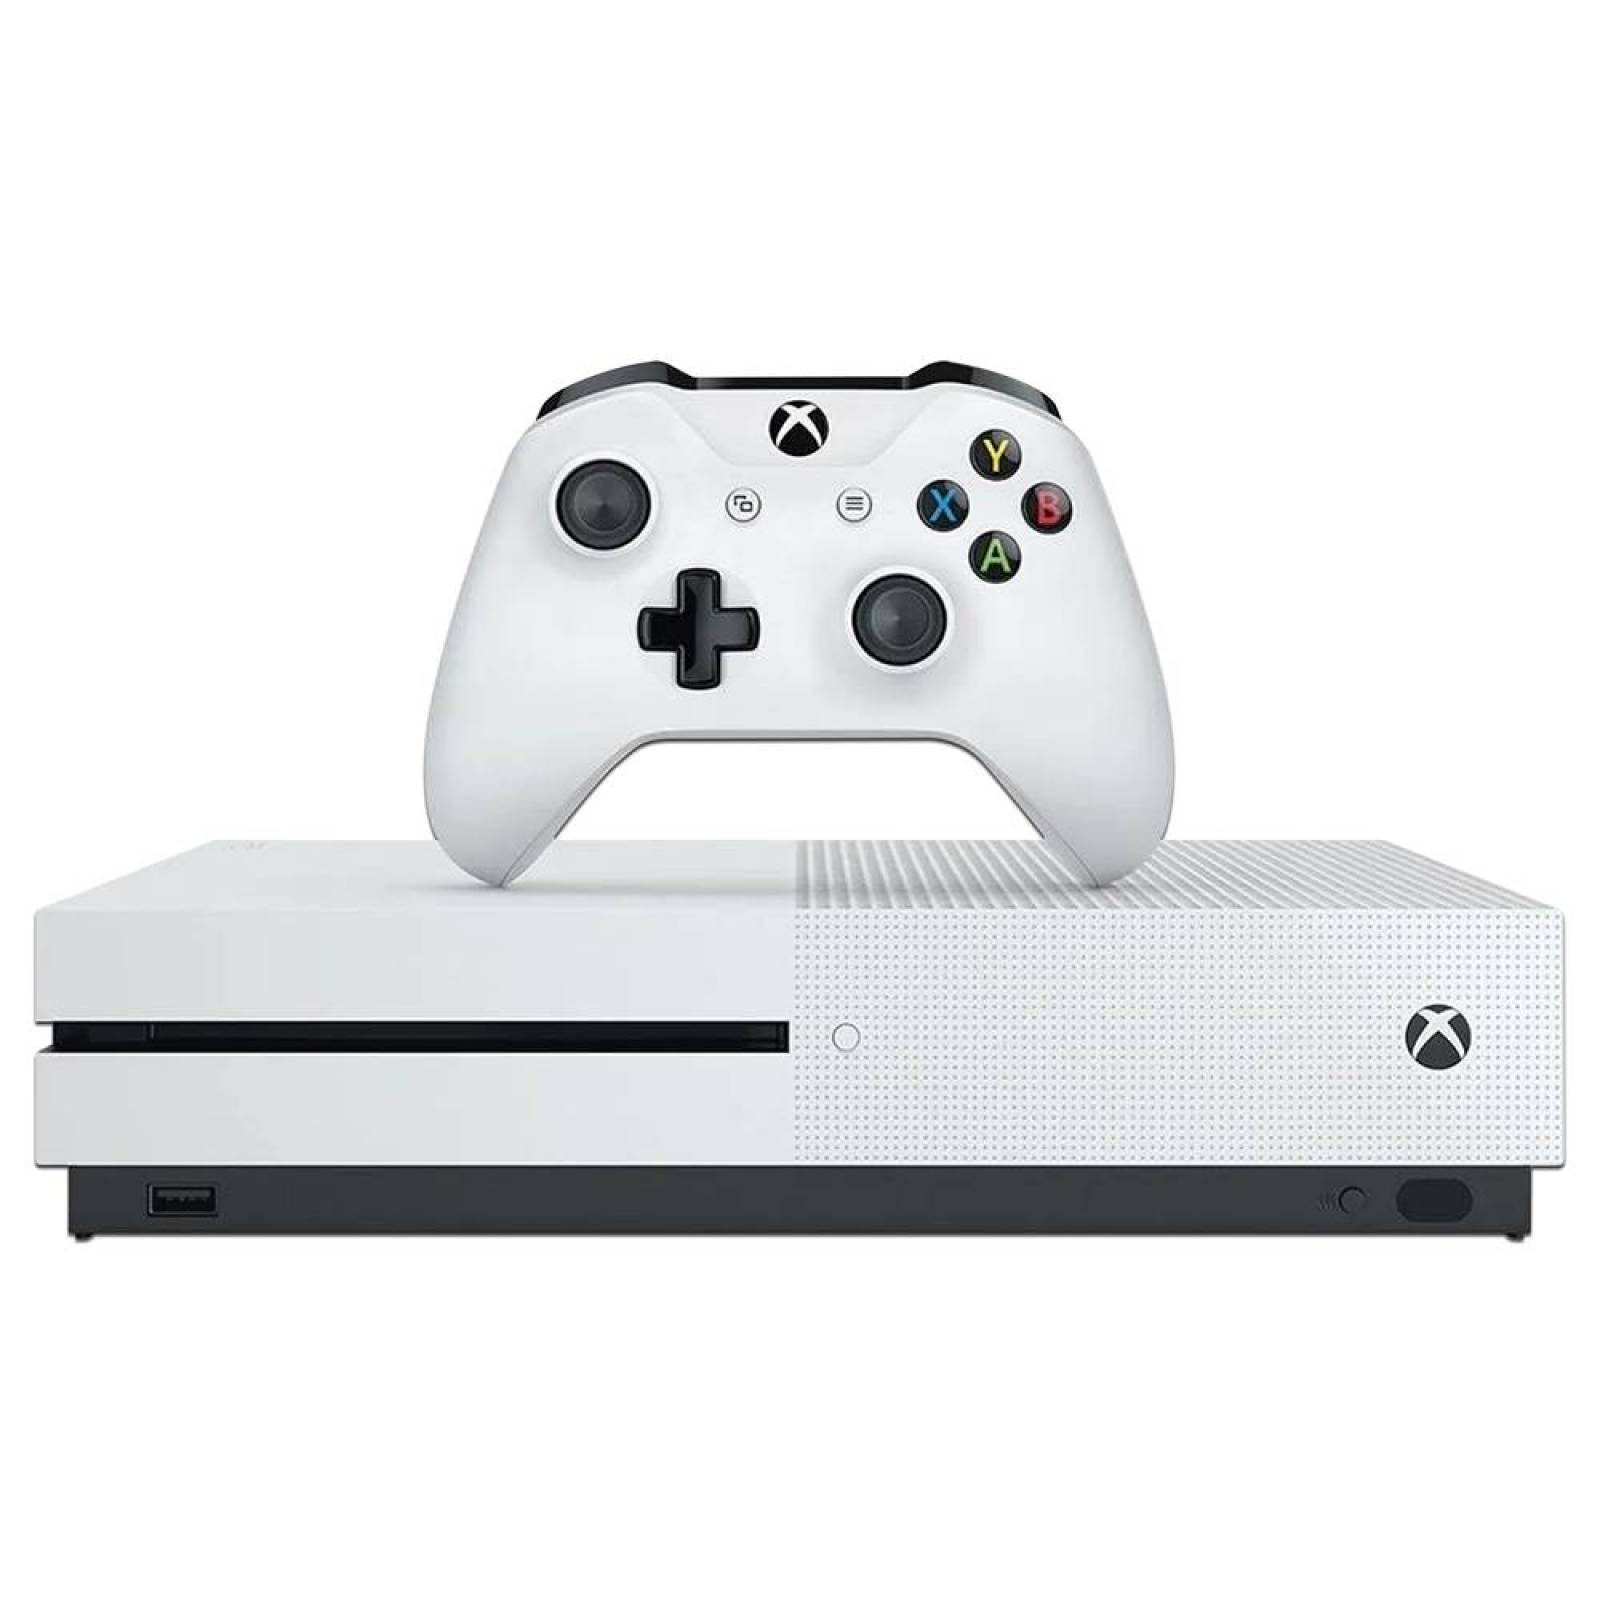 Consola Xbox One S de 1 TB, Color blanco.